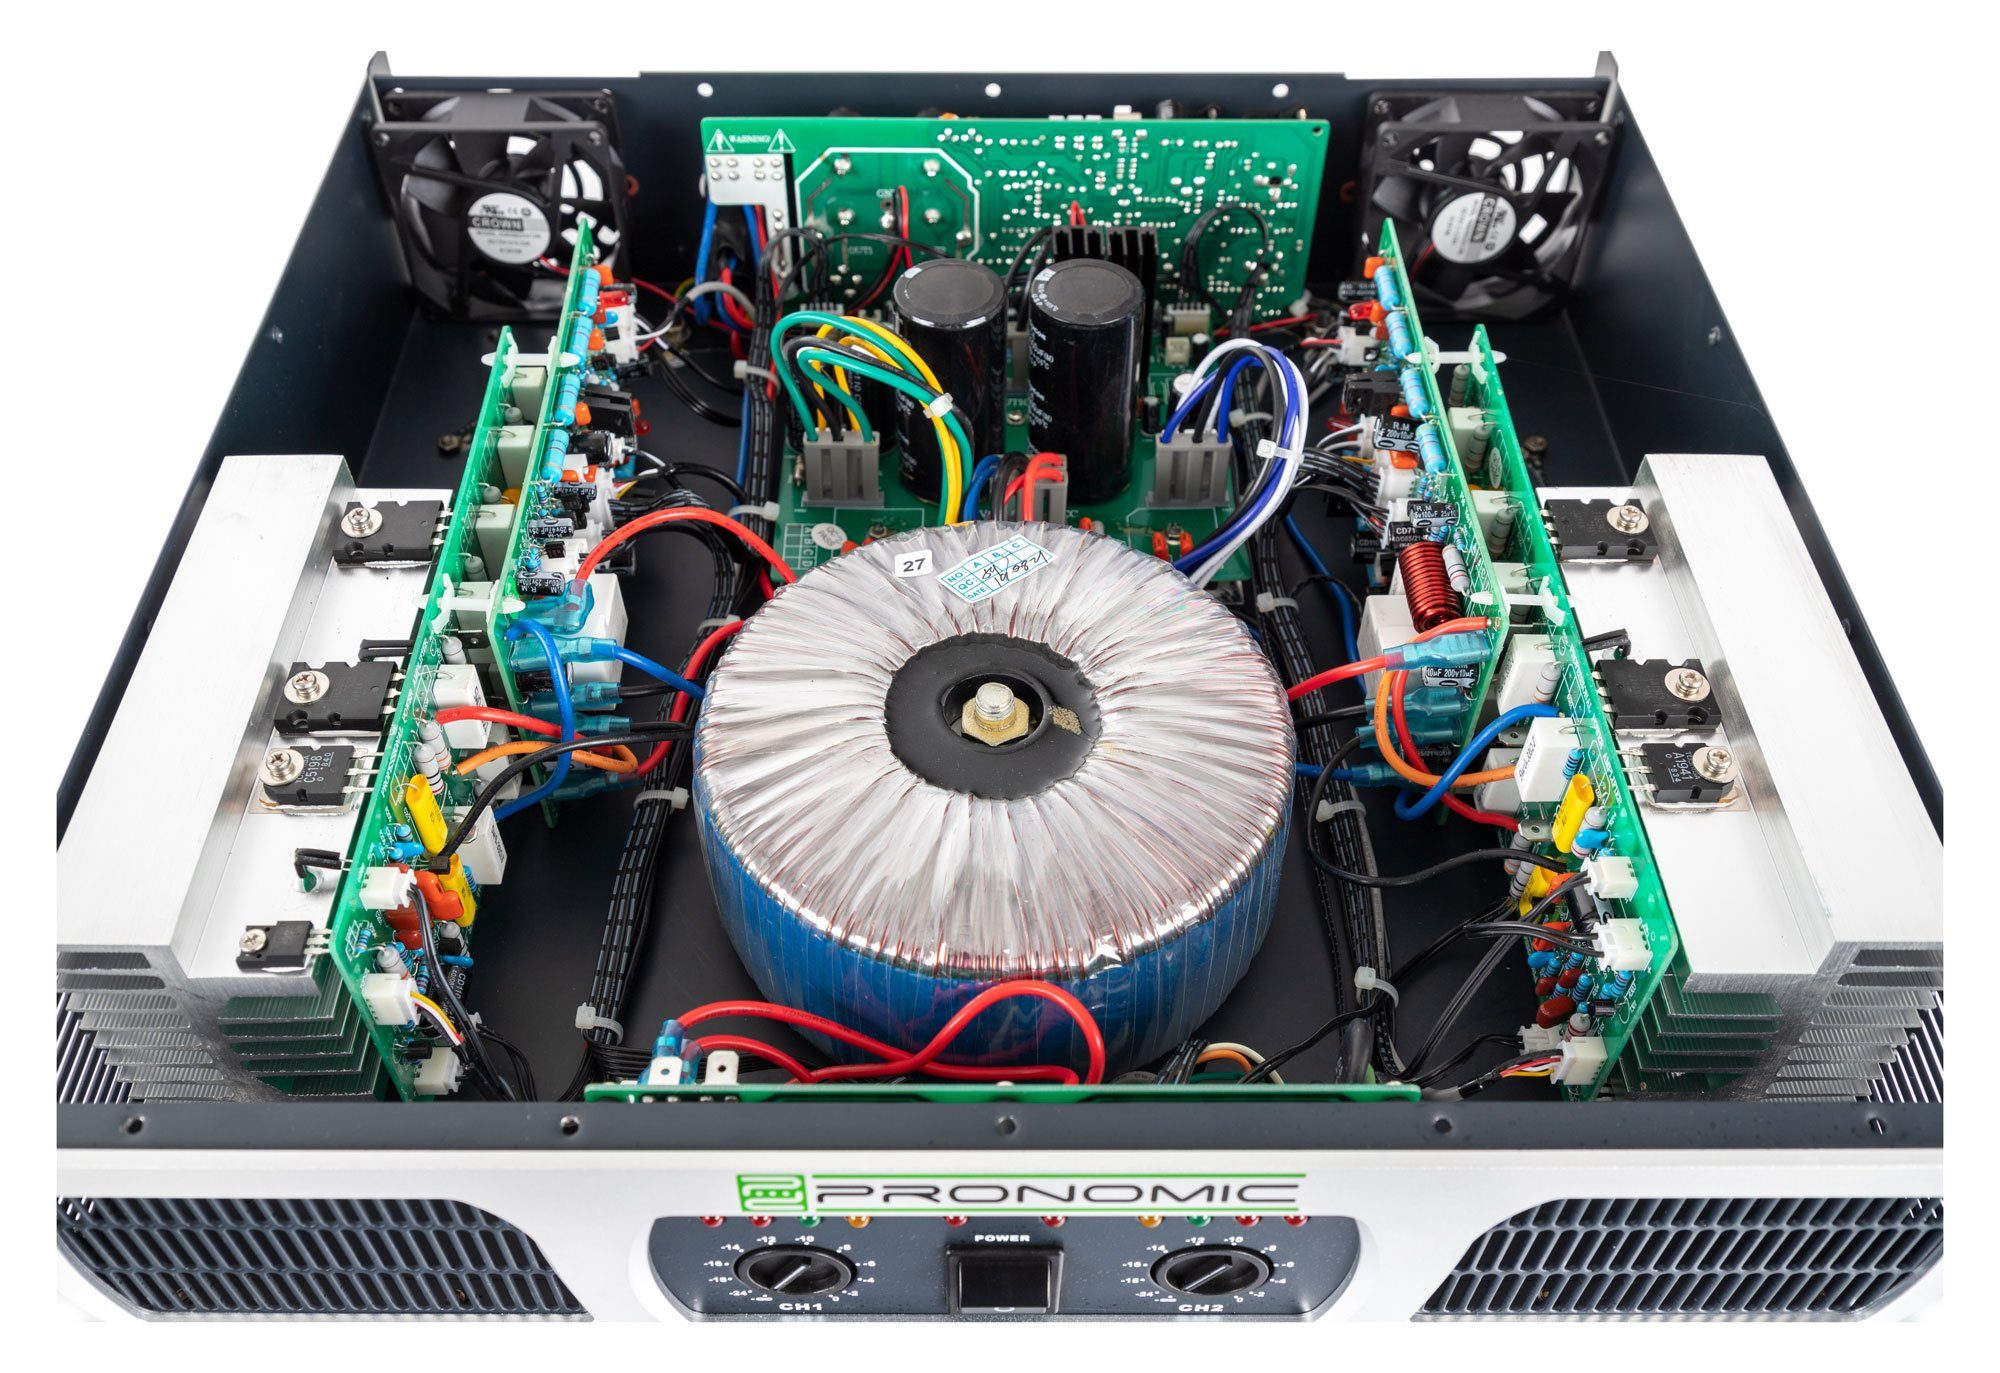 2 W, Stereo-Leistungsverstärker an Schraubklemmen, 500 Watt Endstufe Pronomic Lautsprecher- 1000 Kanal TL-200 2x Kanäle: 2 Verstärker (Anzahl Ohm) mit